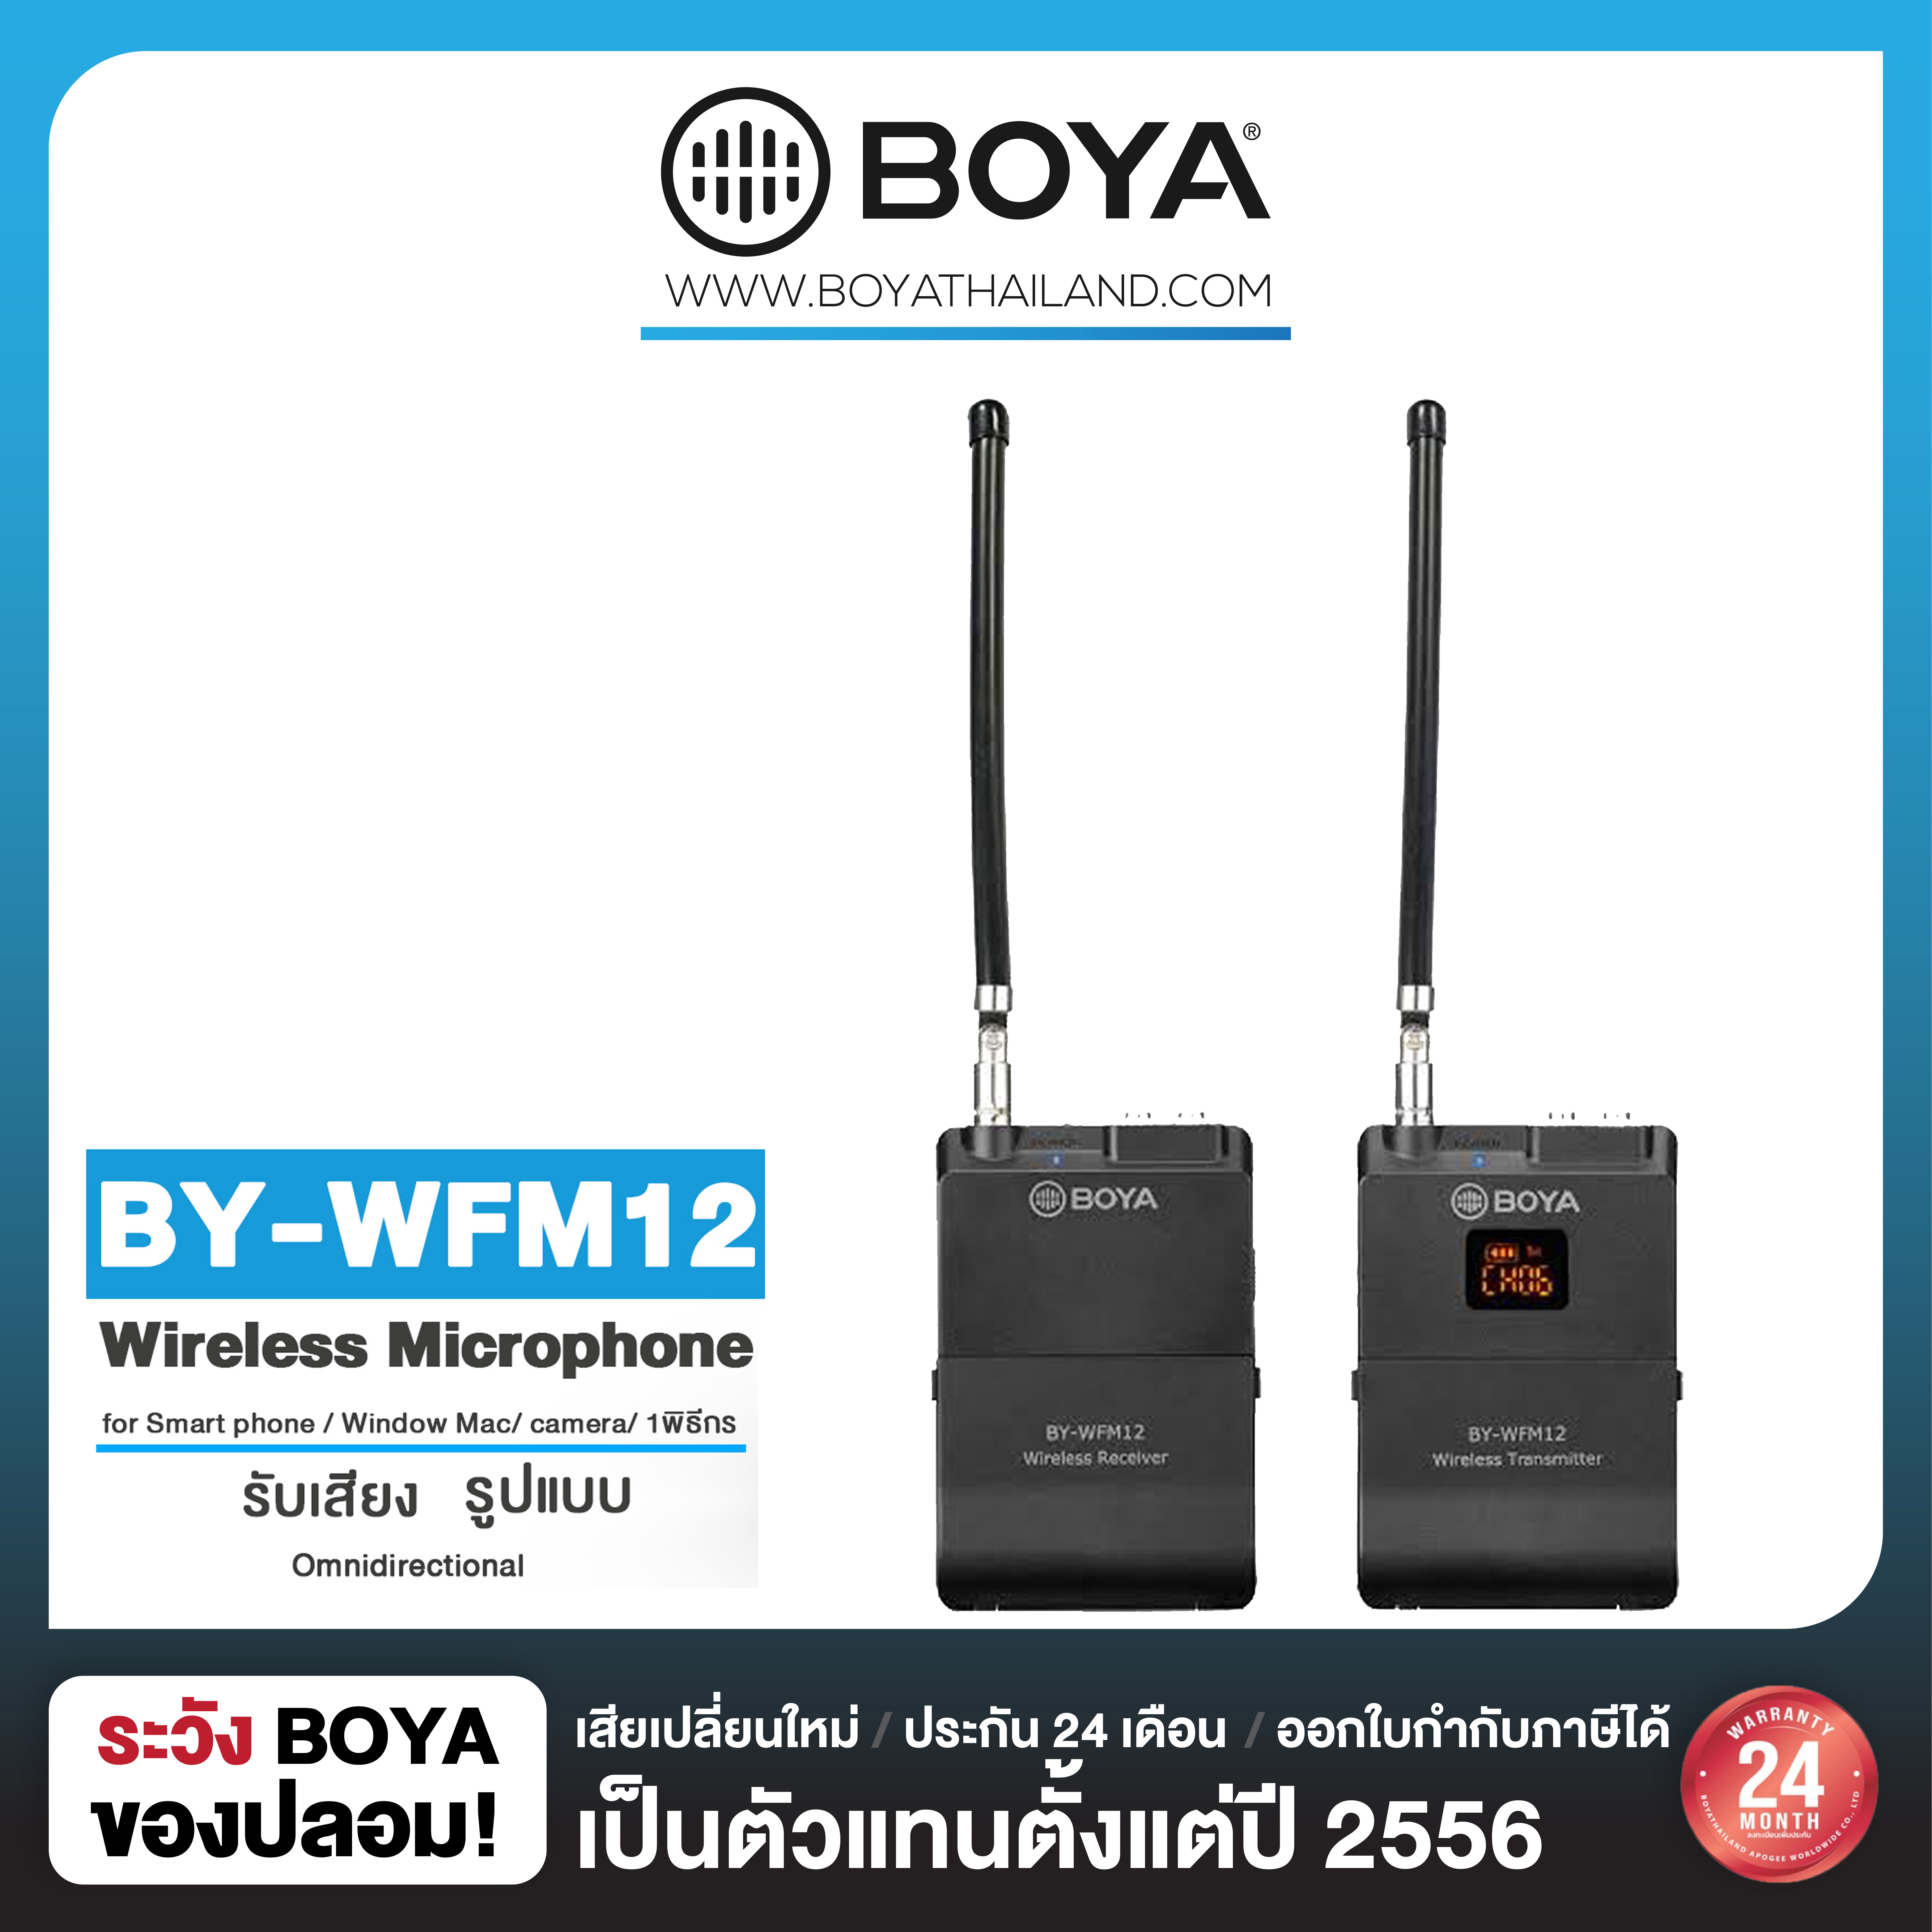 BOYA BY-WFM12 ไมค์ไร้สาย VHF Wireless Microphone